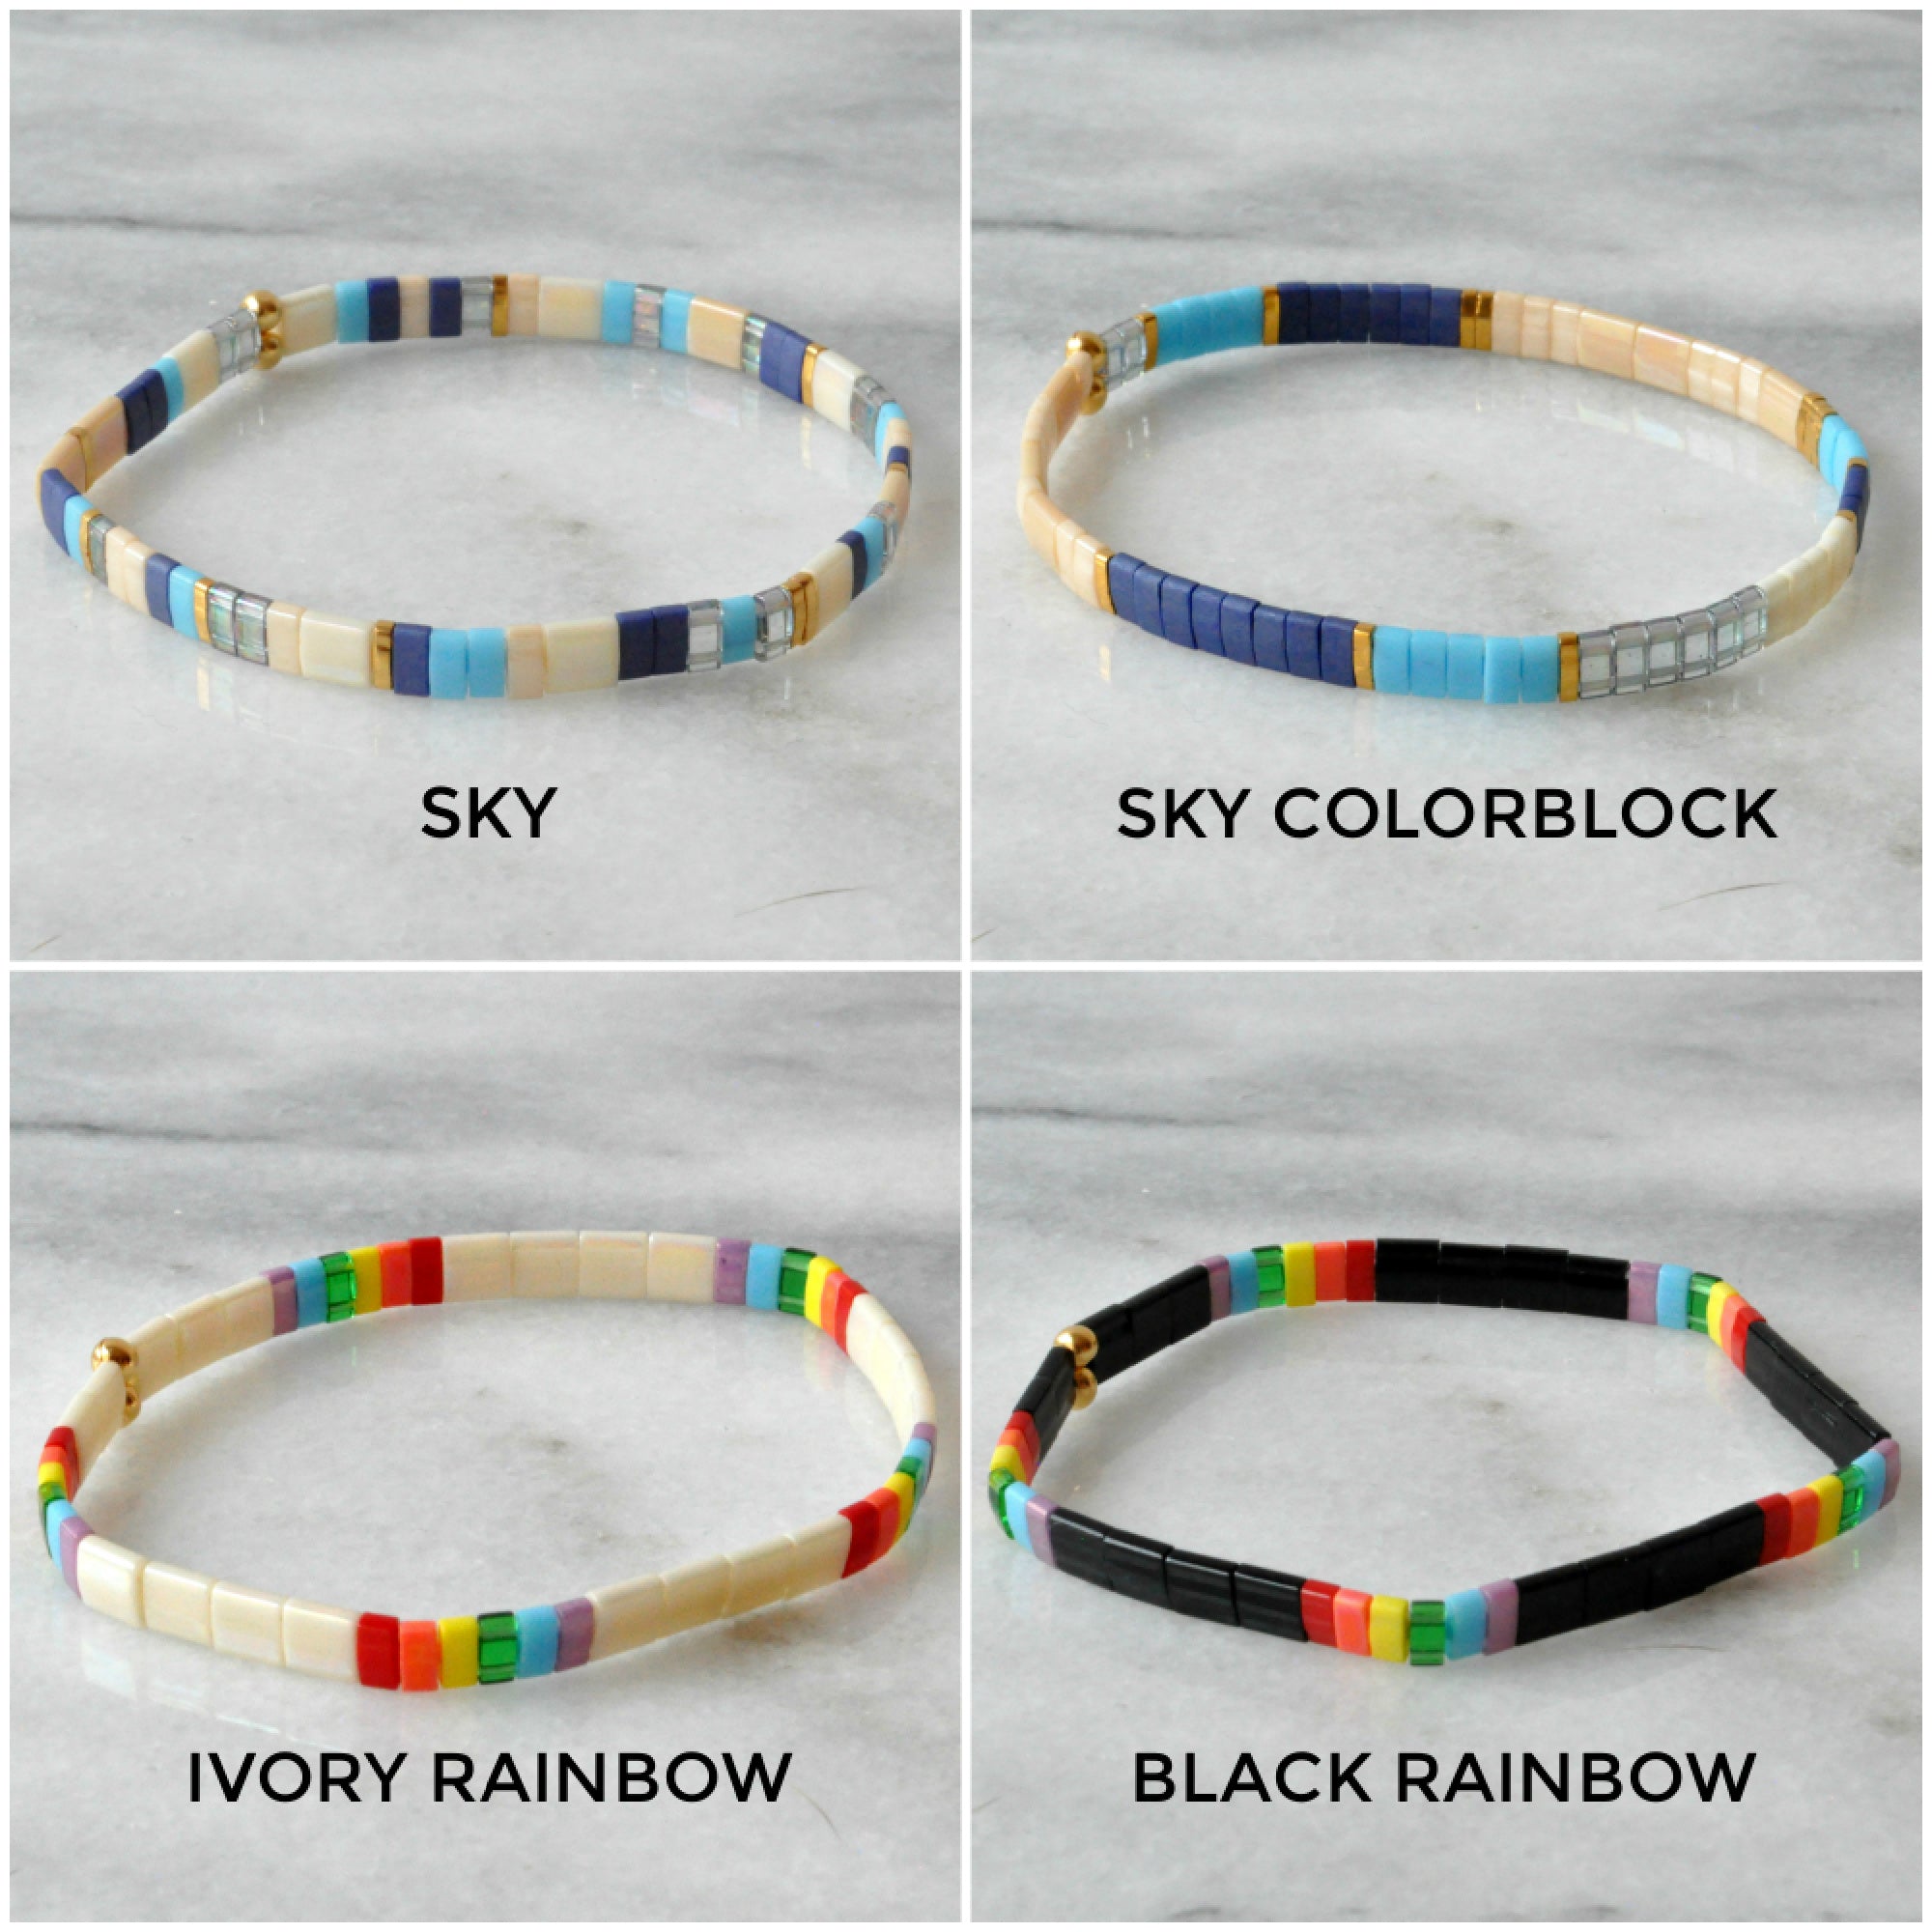 Libby & Smee blue tile bracelets and rainbow tile bracelets